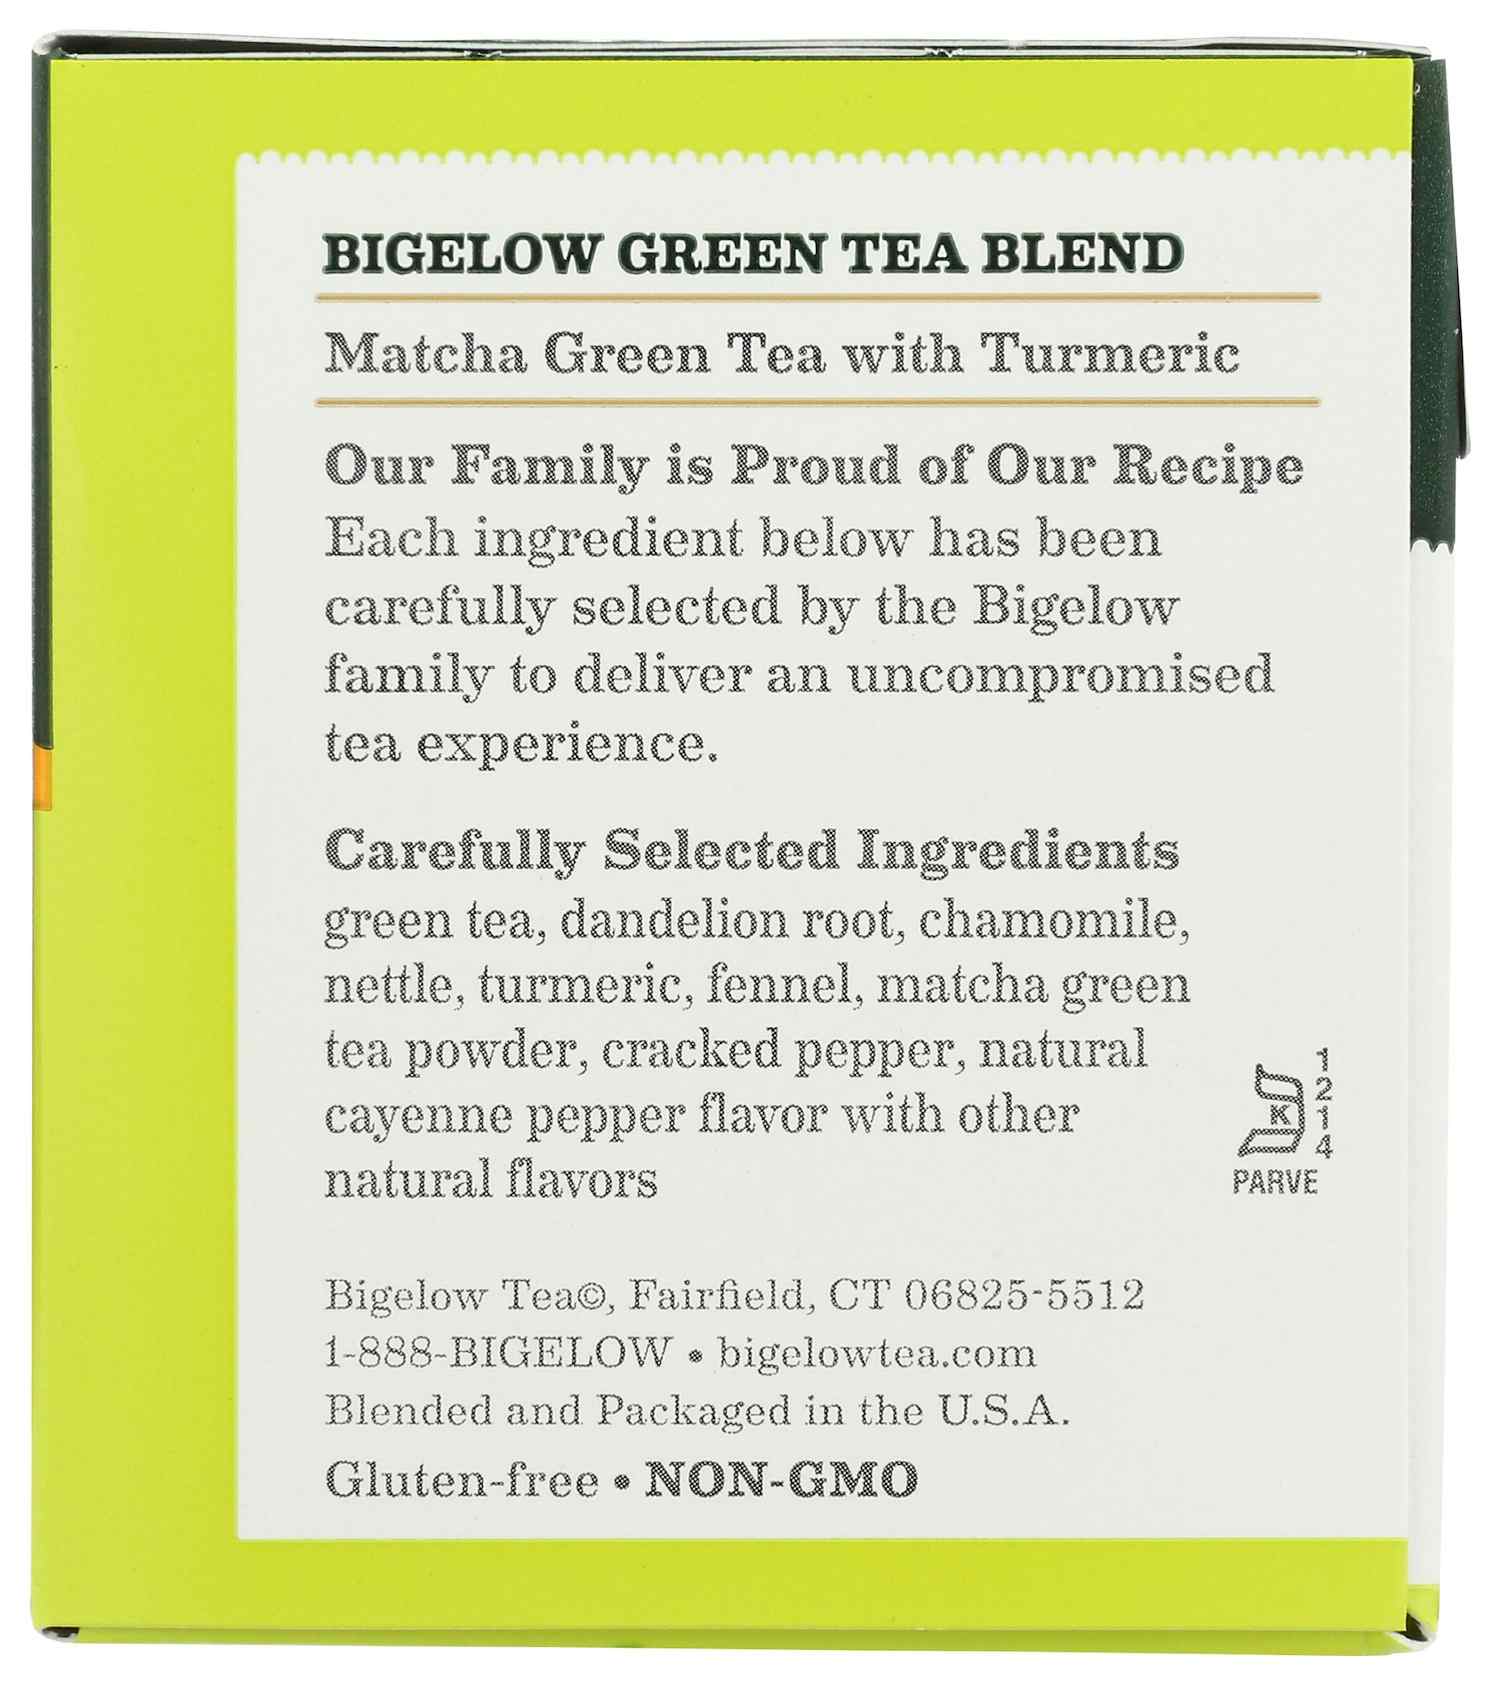 Bigelow Matcha Green Tea with Tumeric